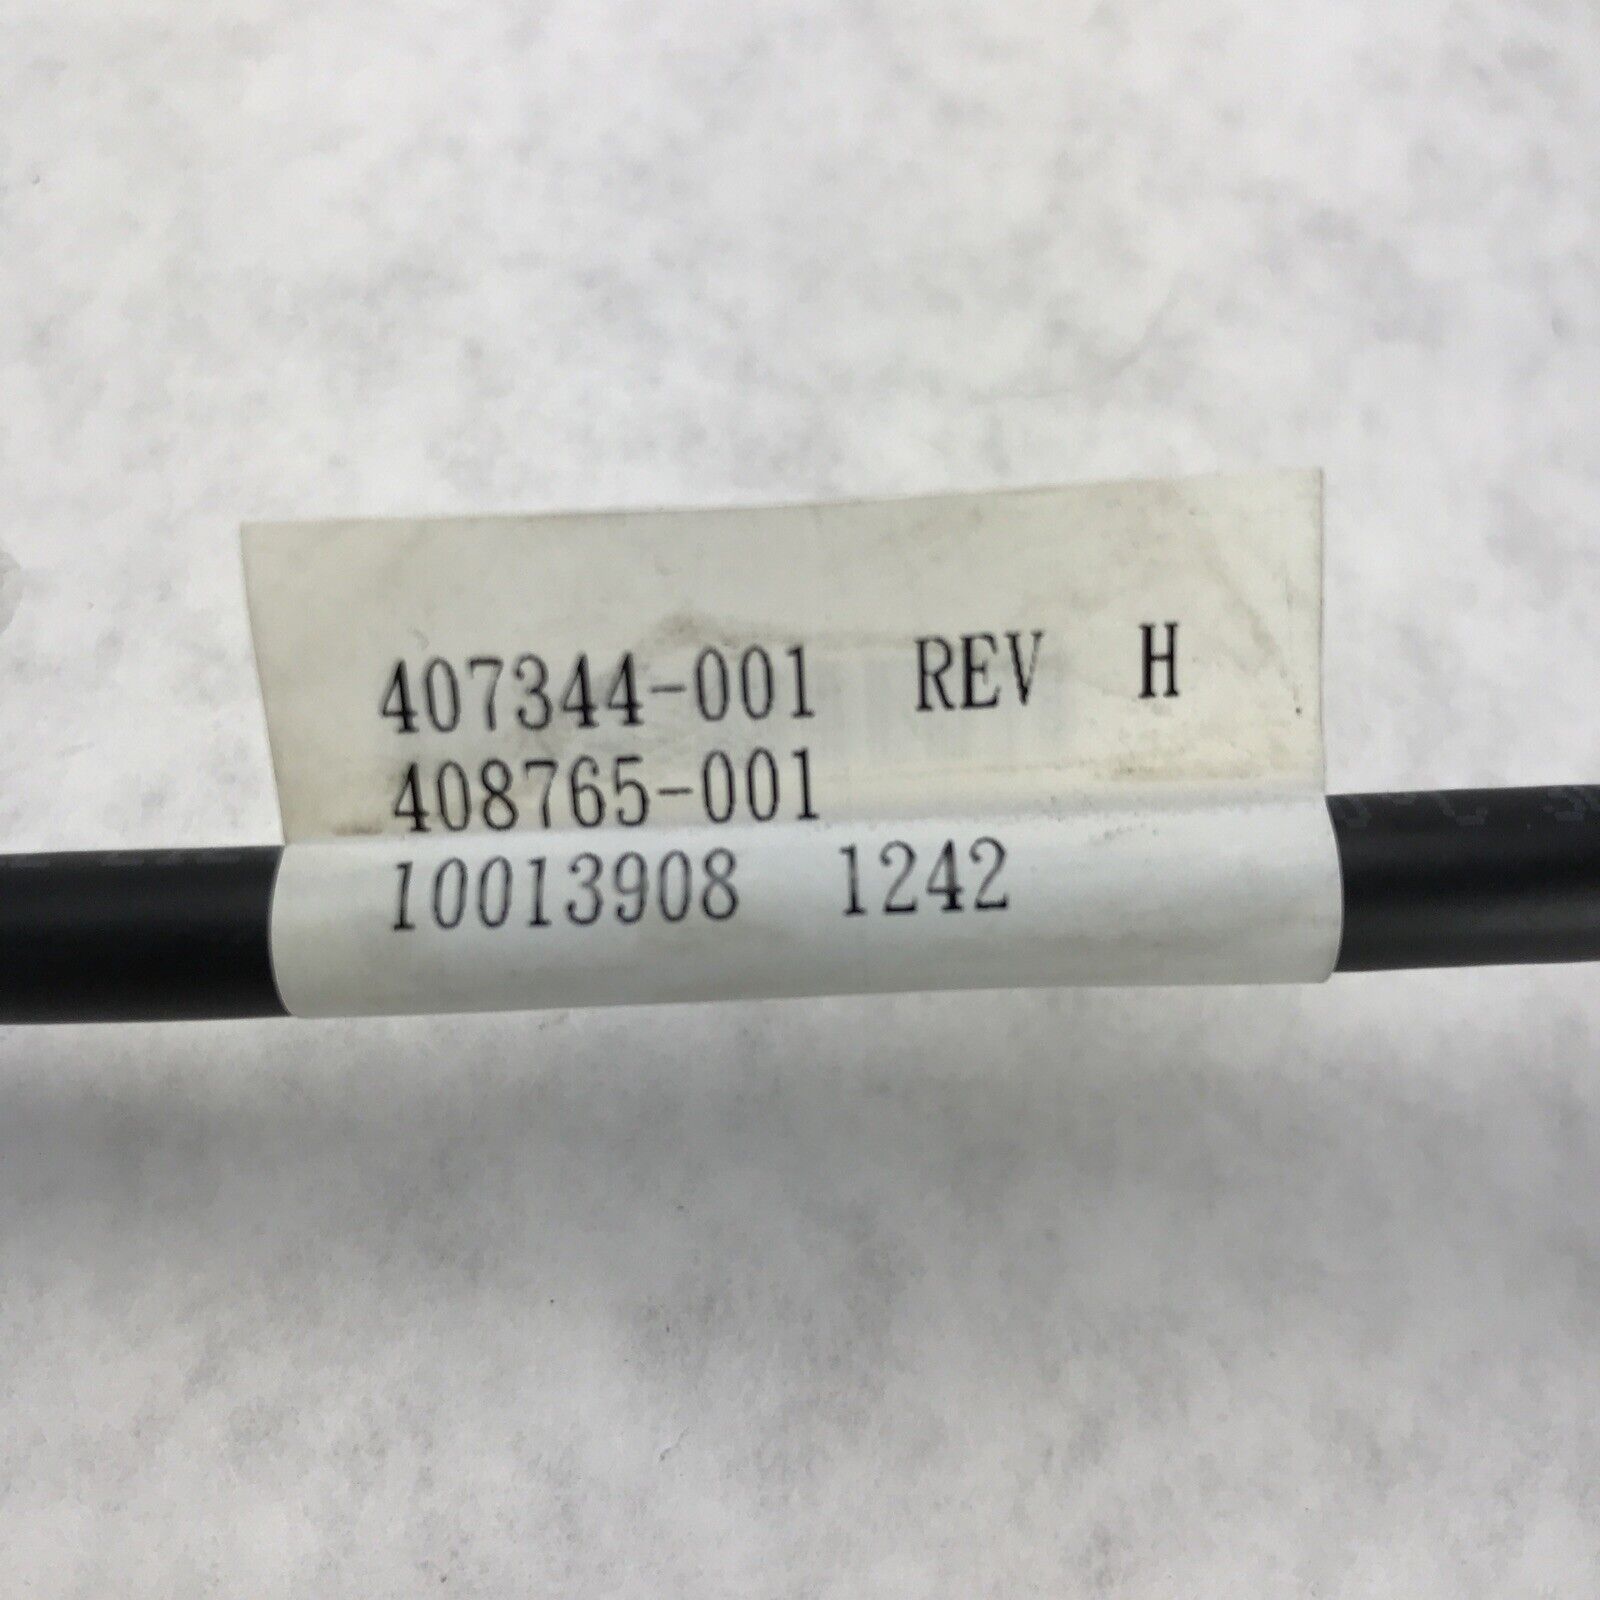 HP 407344-001 0.5m External Mini SAS Cable 408765-001